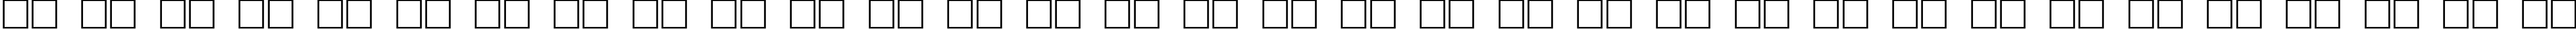 Пример написания русского алфавита шрифтом CourierTM Italic